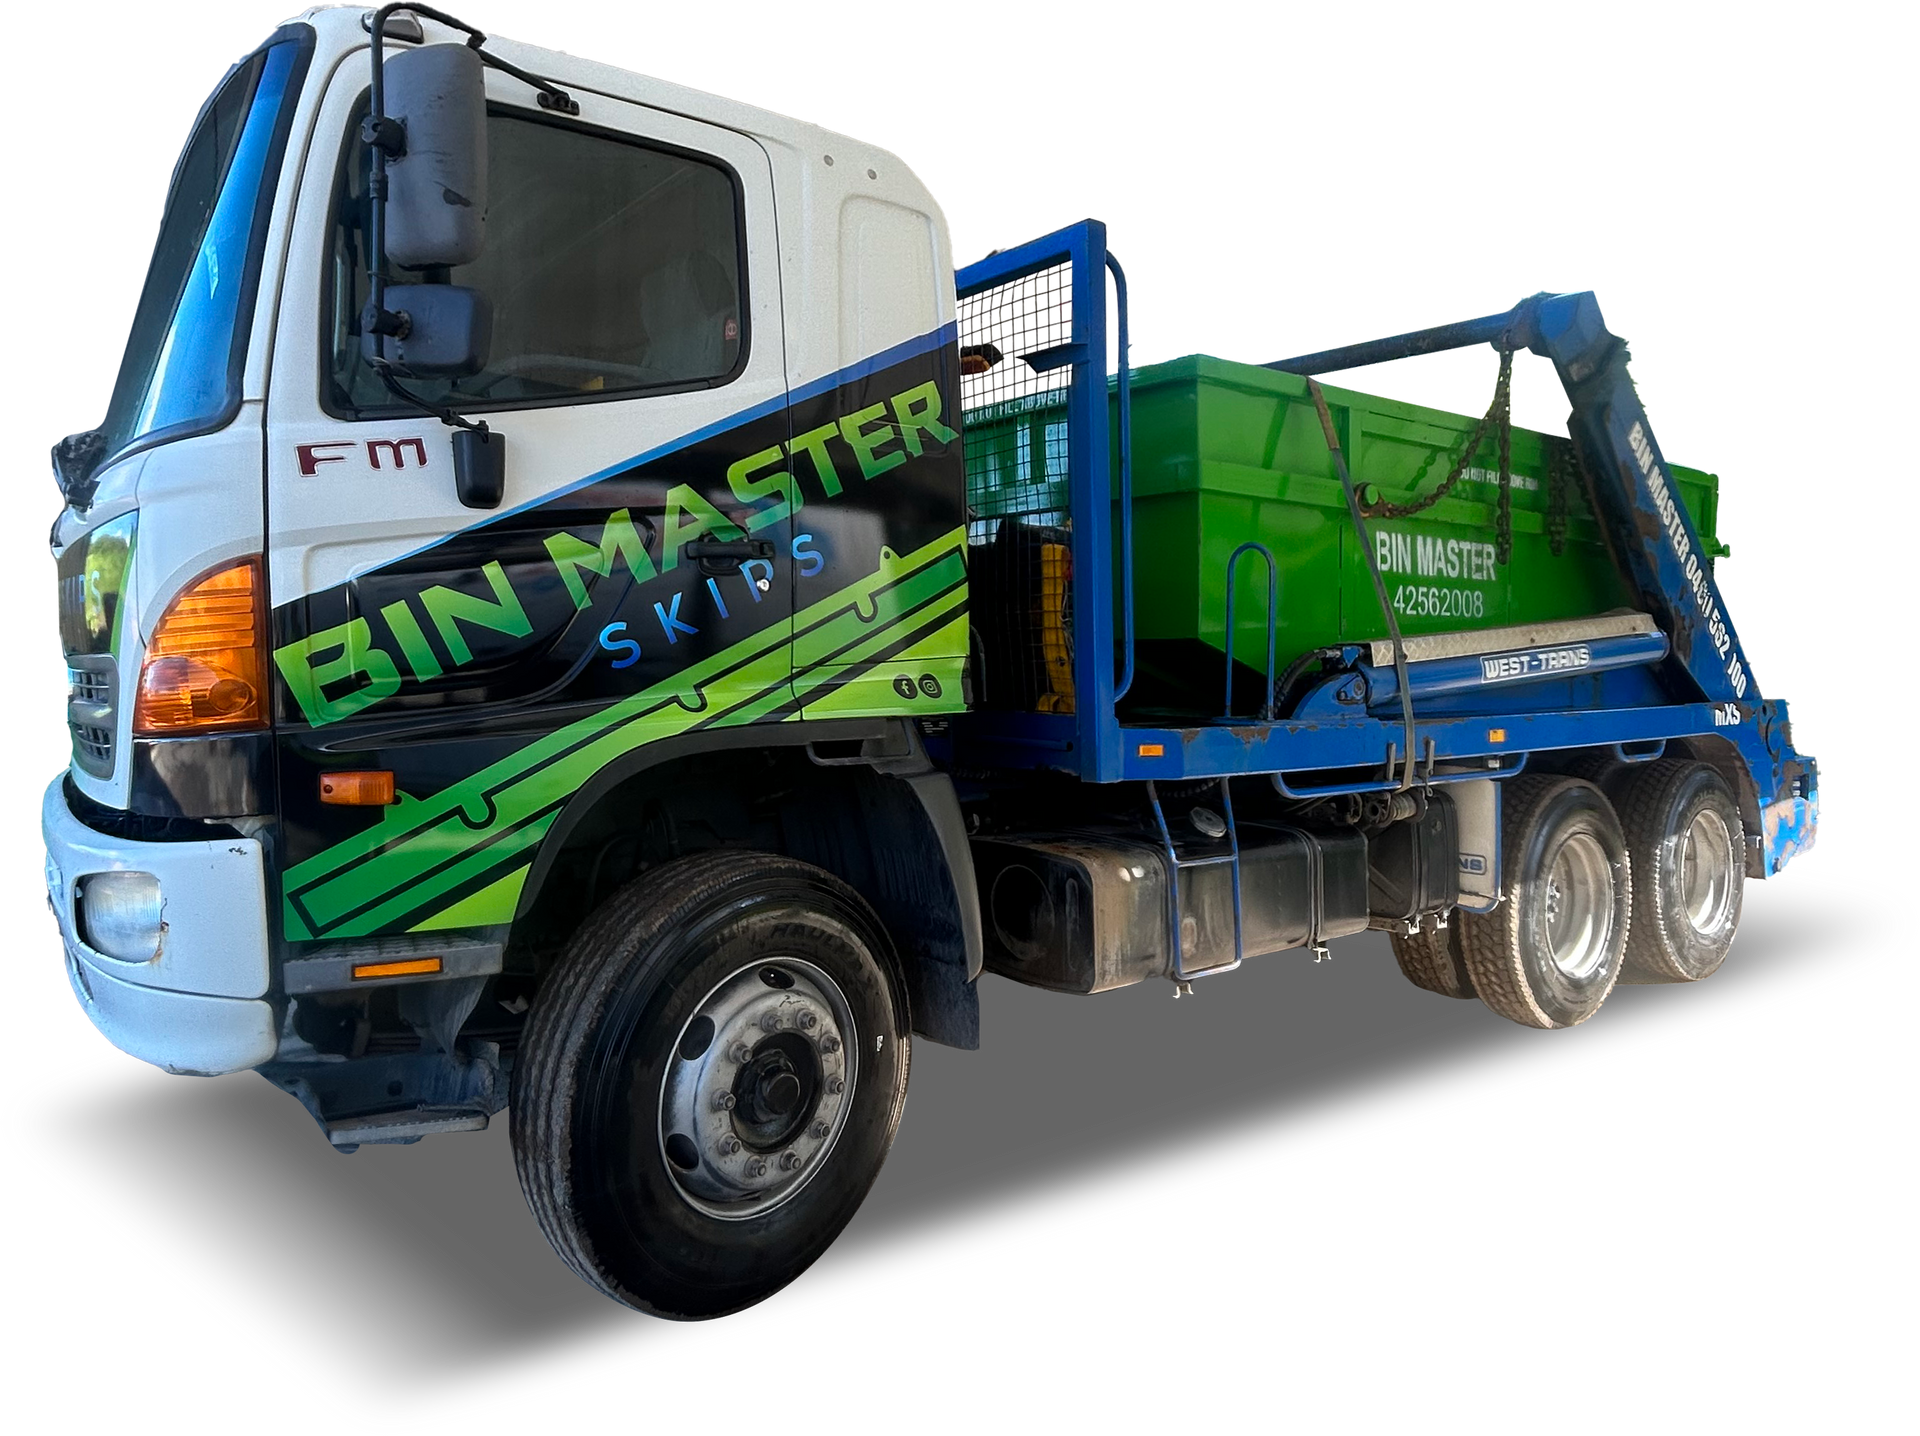 Bin Master truck for skip bins